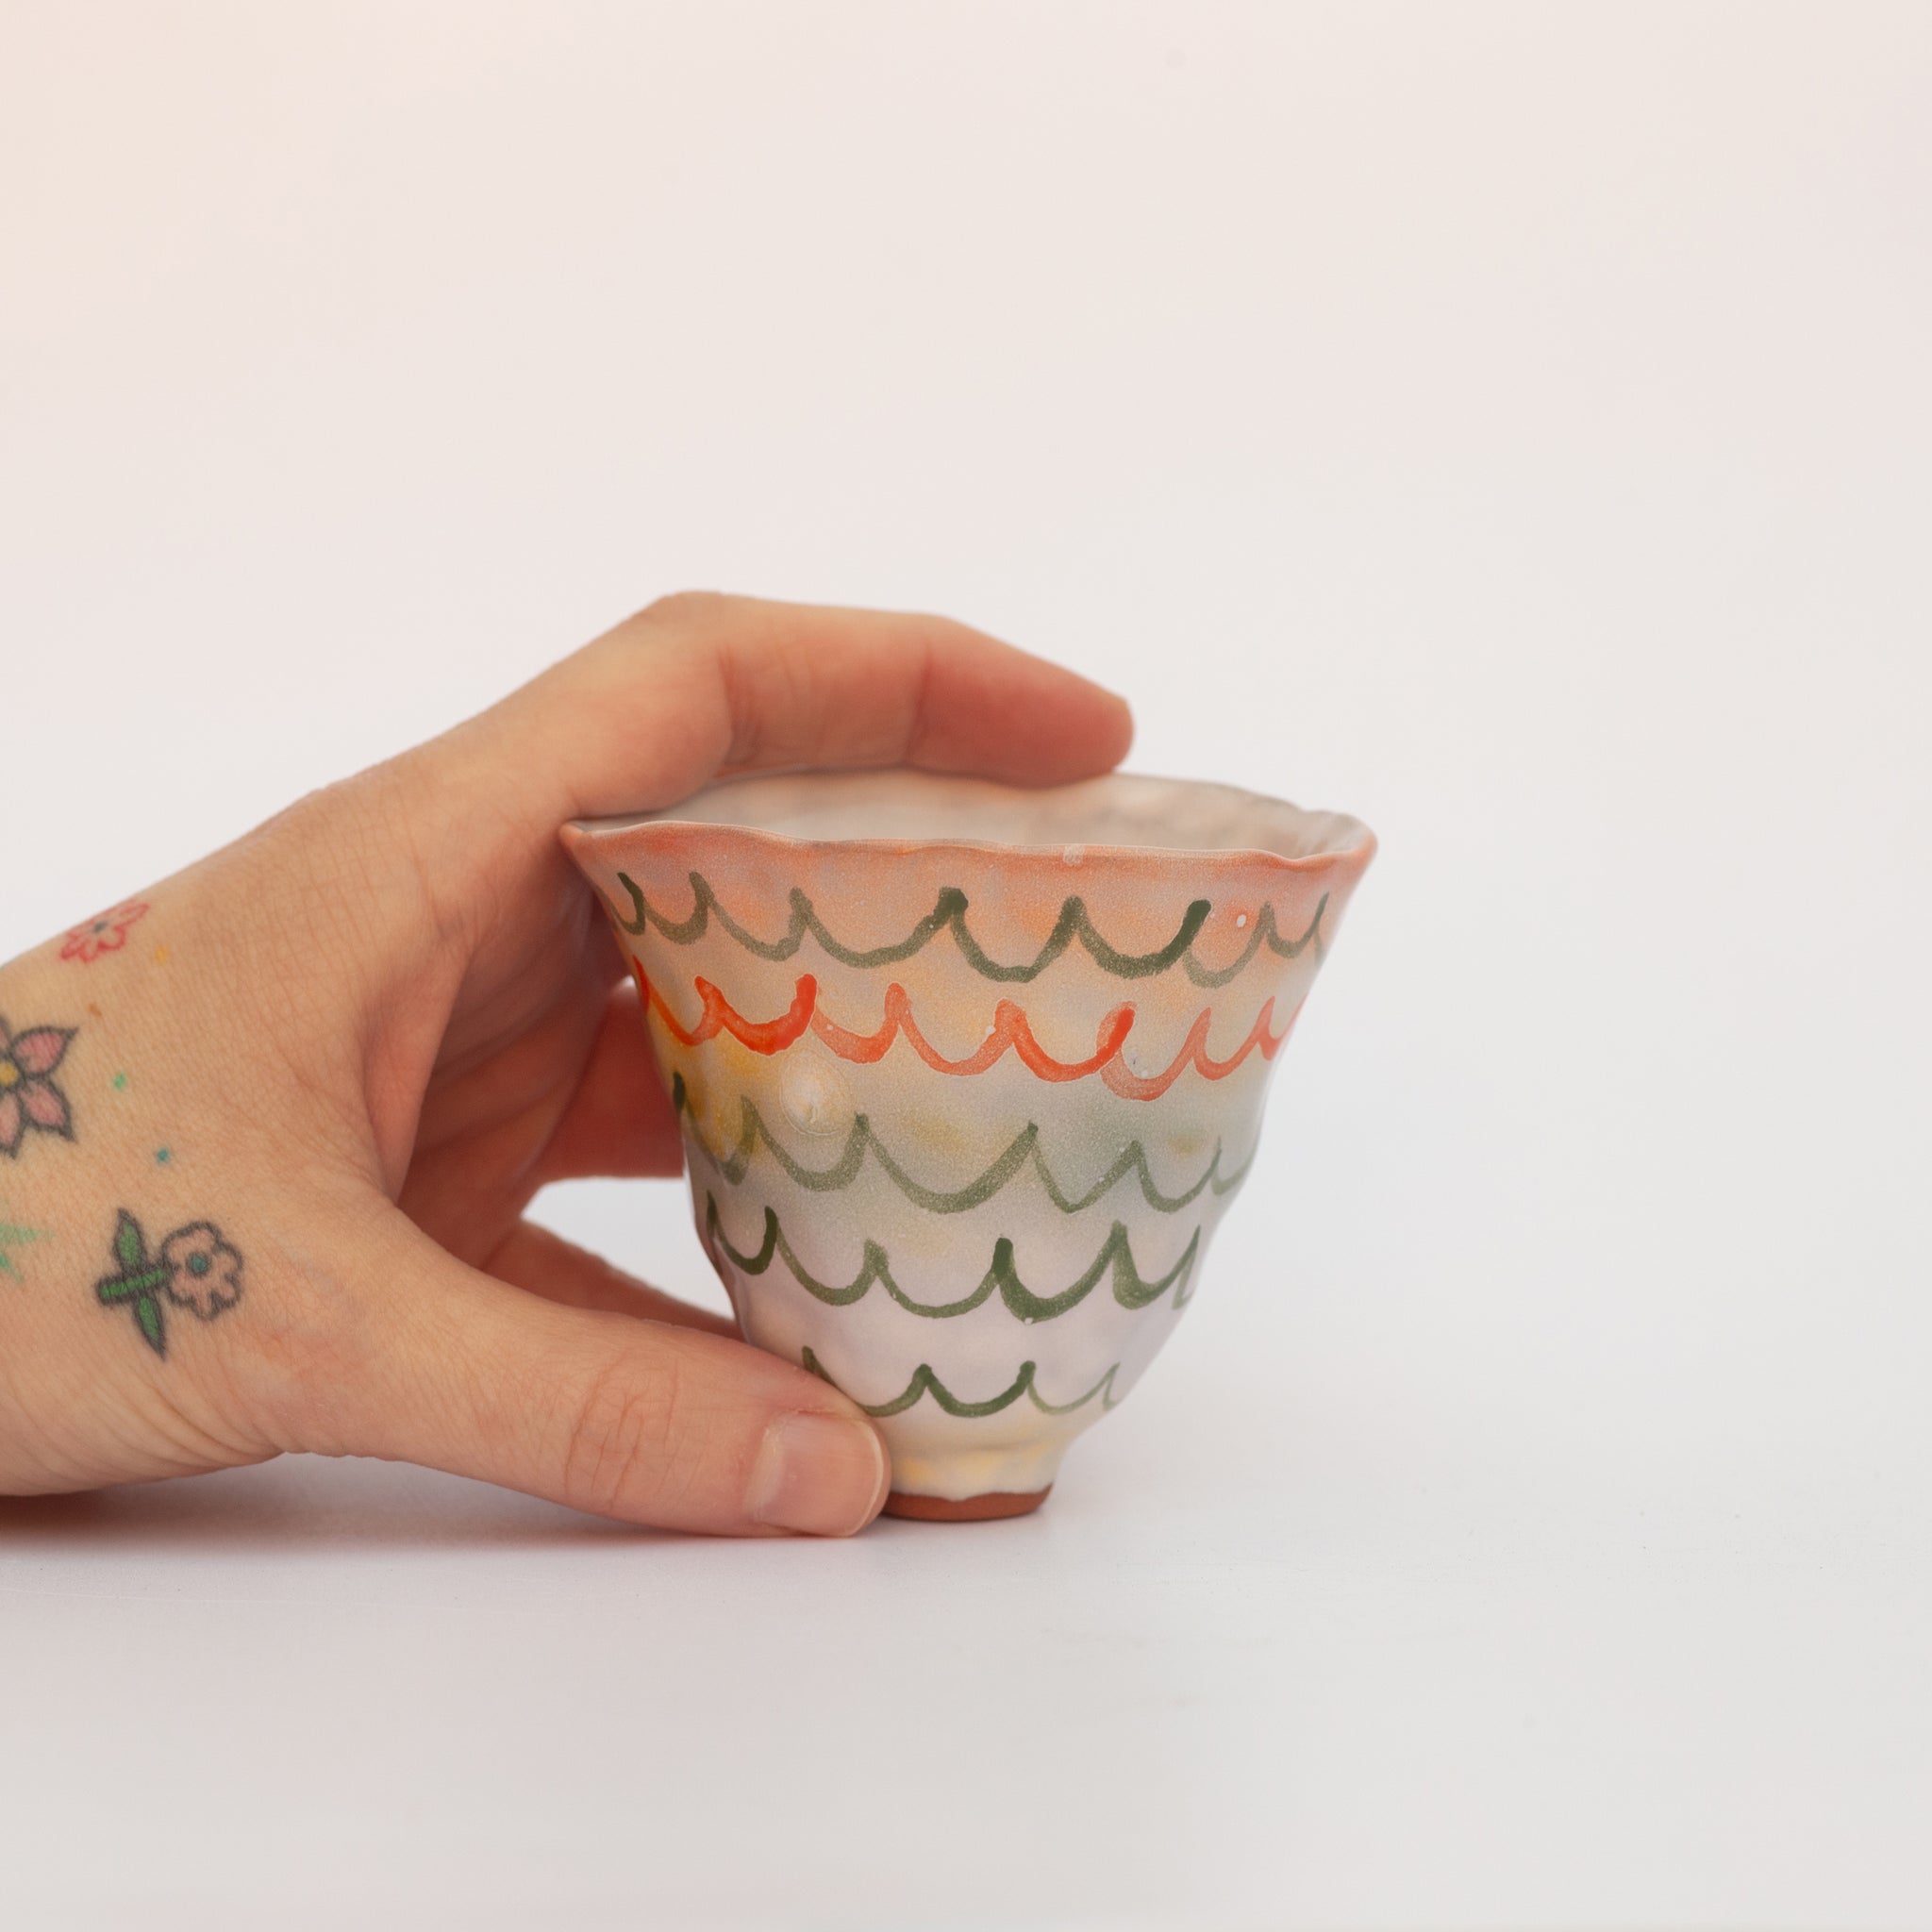 Small explorative cup